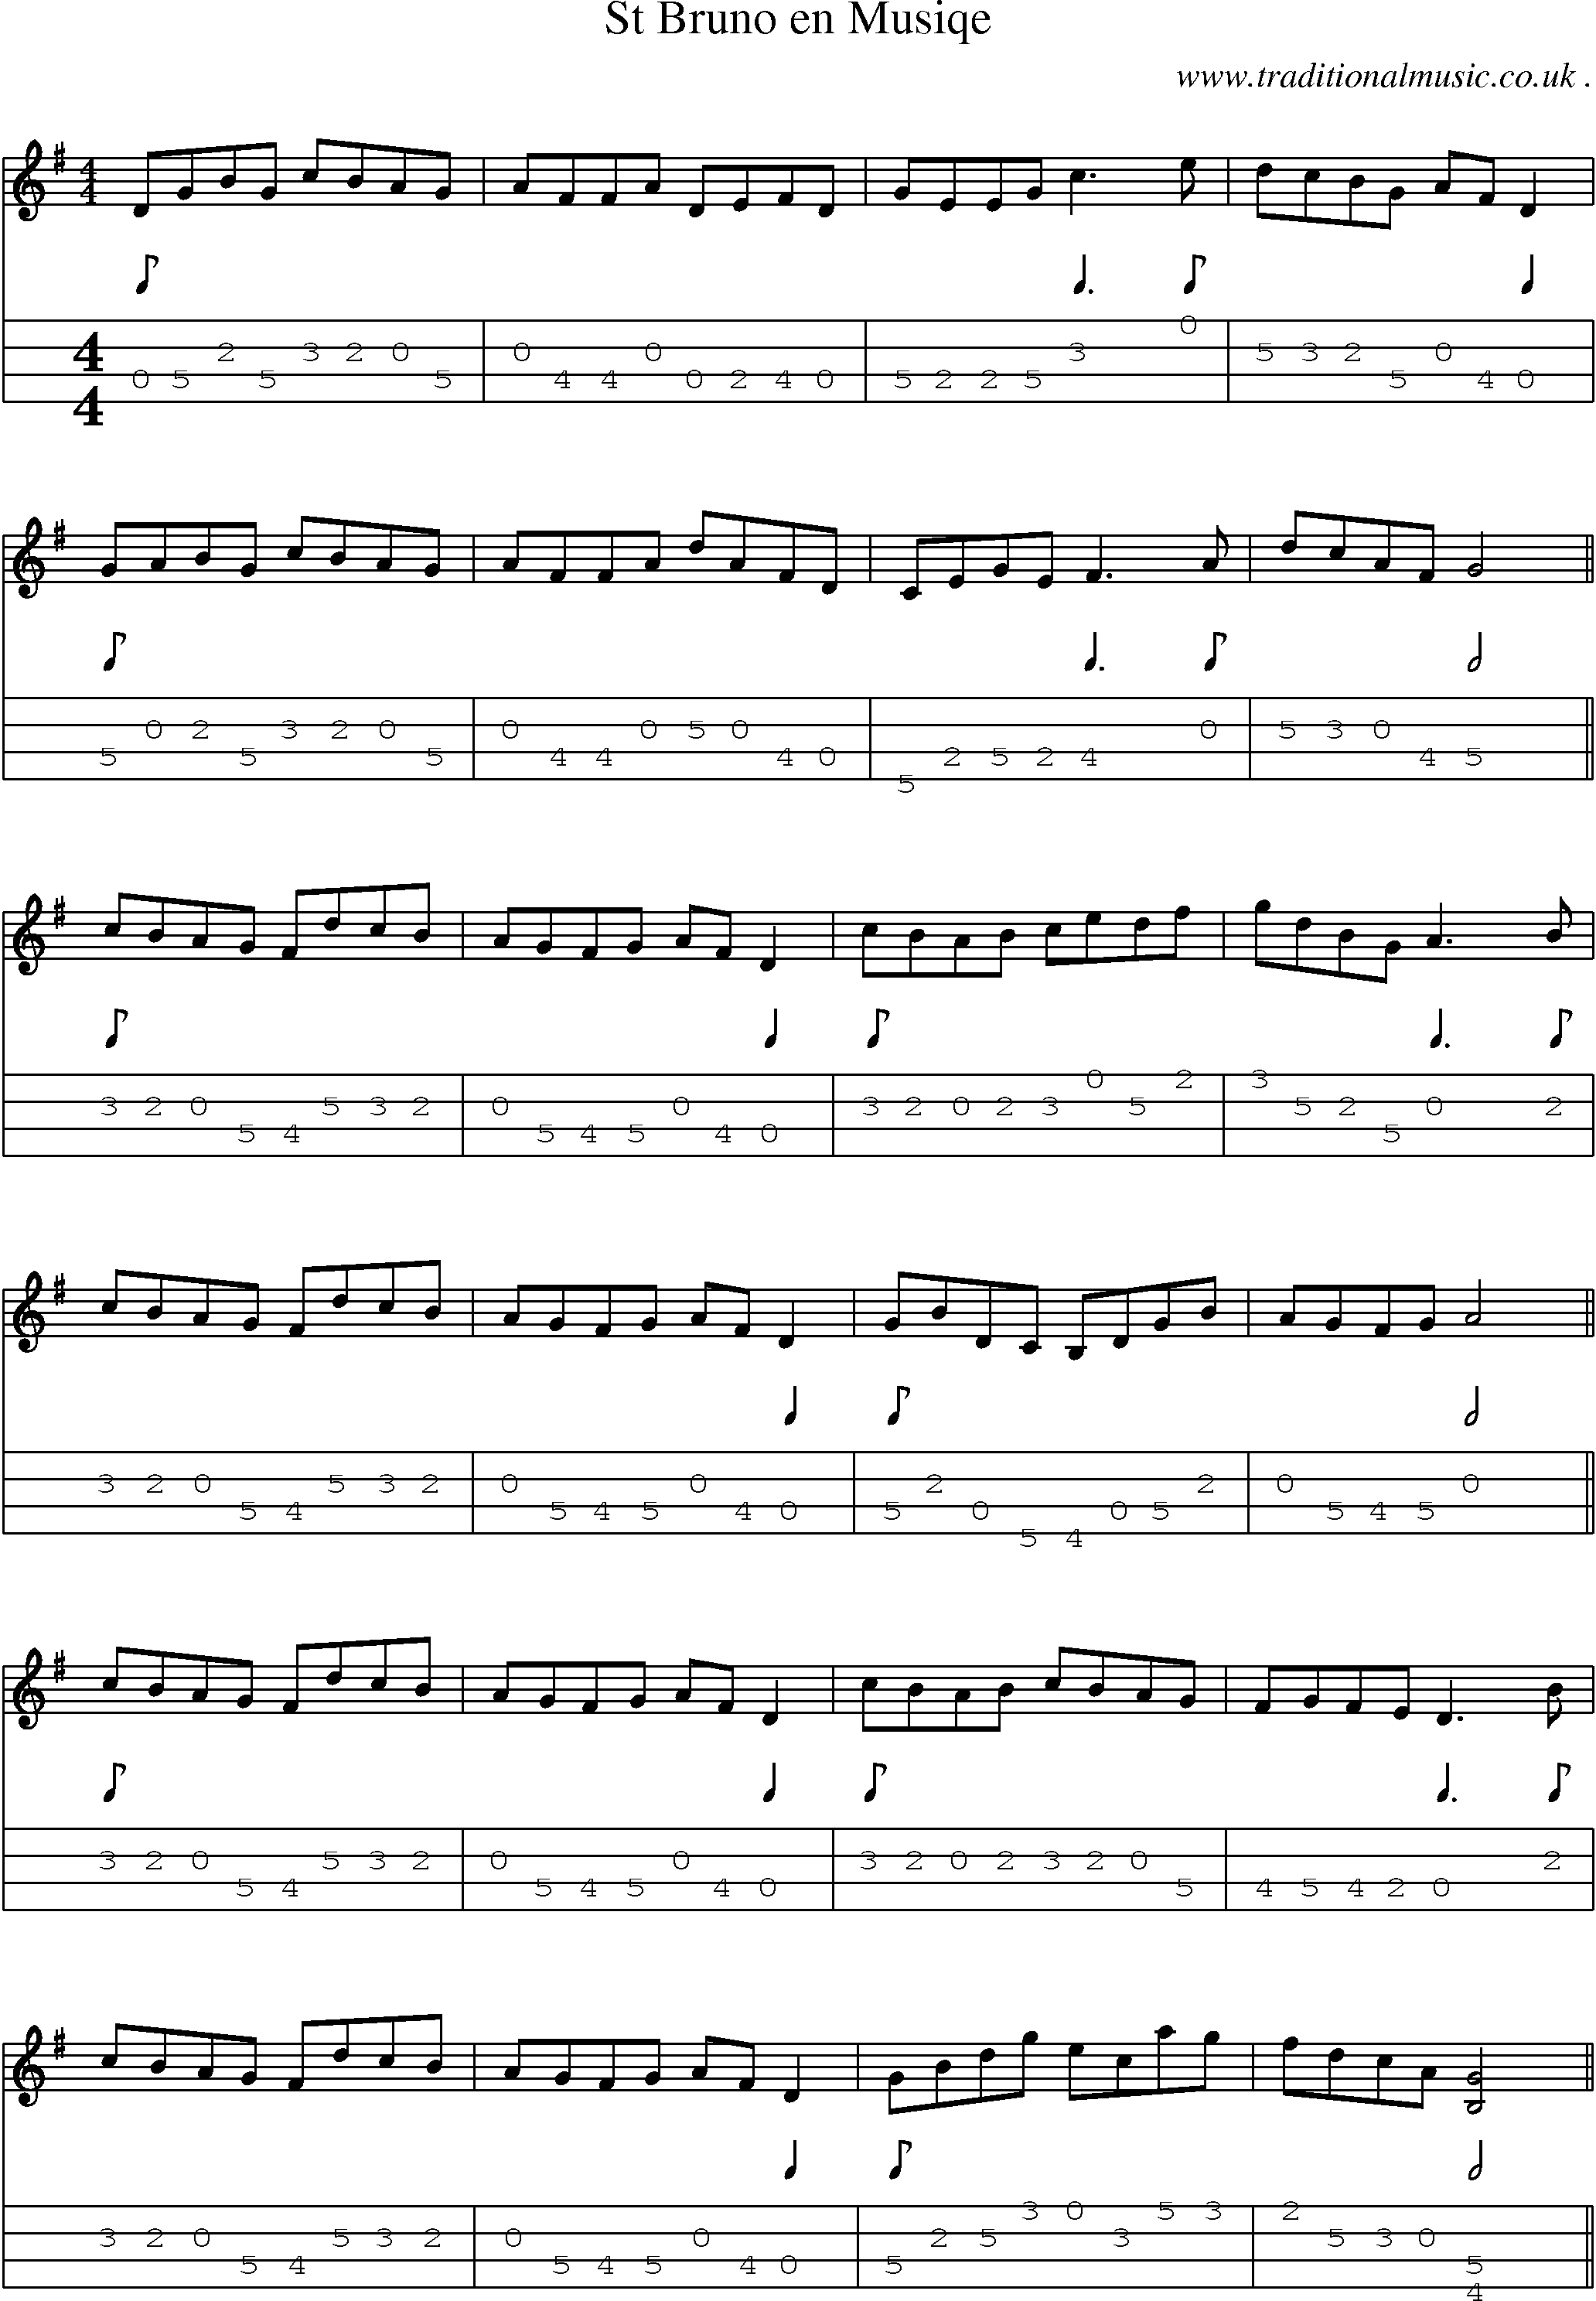 Sheet-Music and Mandolin Tabs for St Bruno En Musiqe